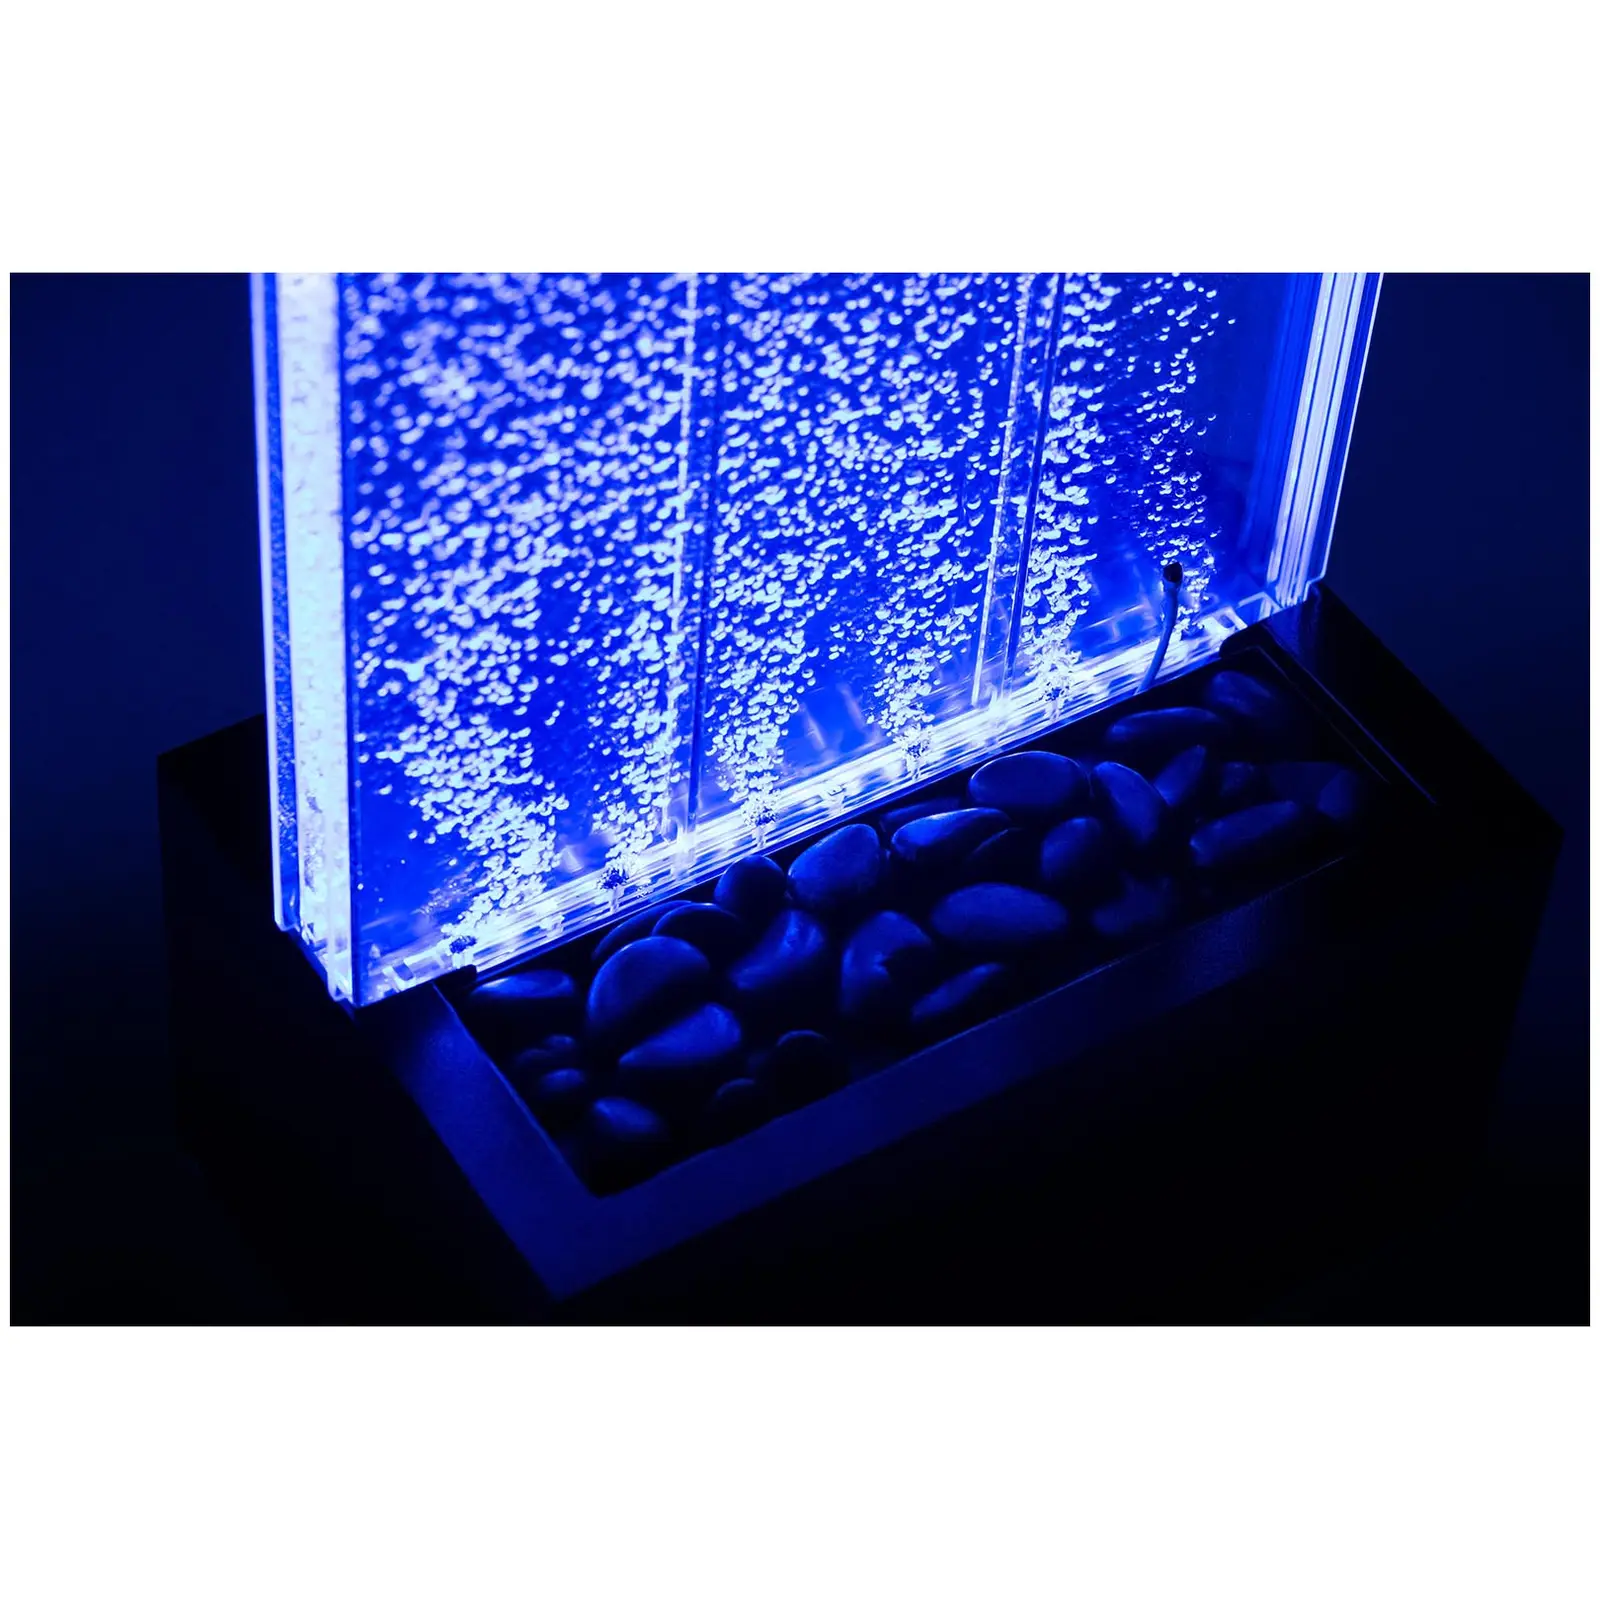 Muro d'acqua LED - 39 x 151.5 x 26 cm